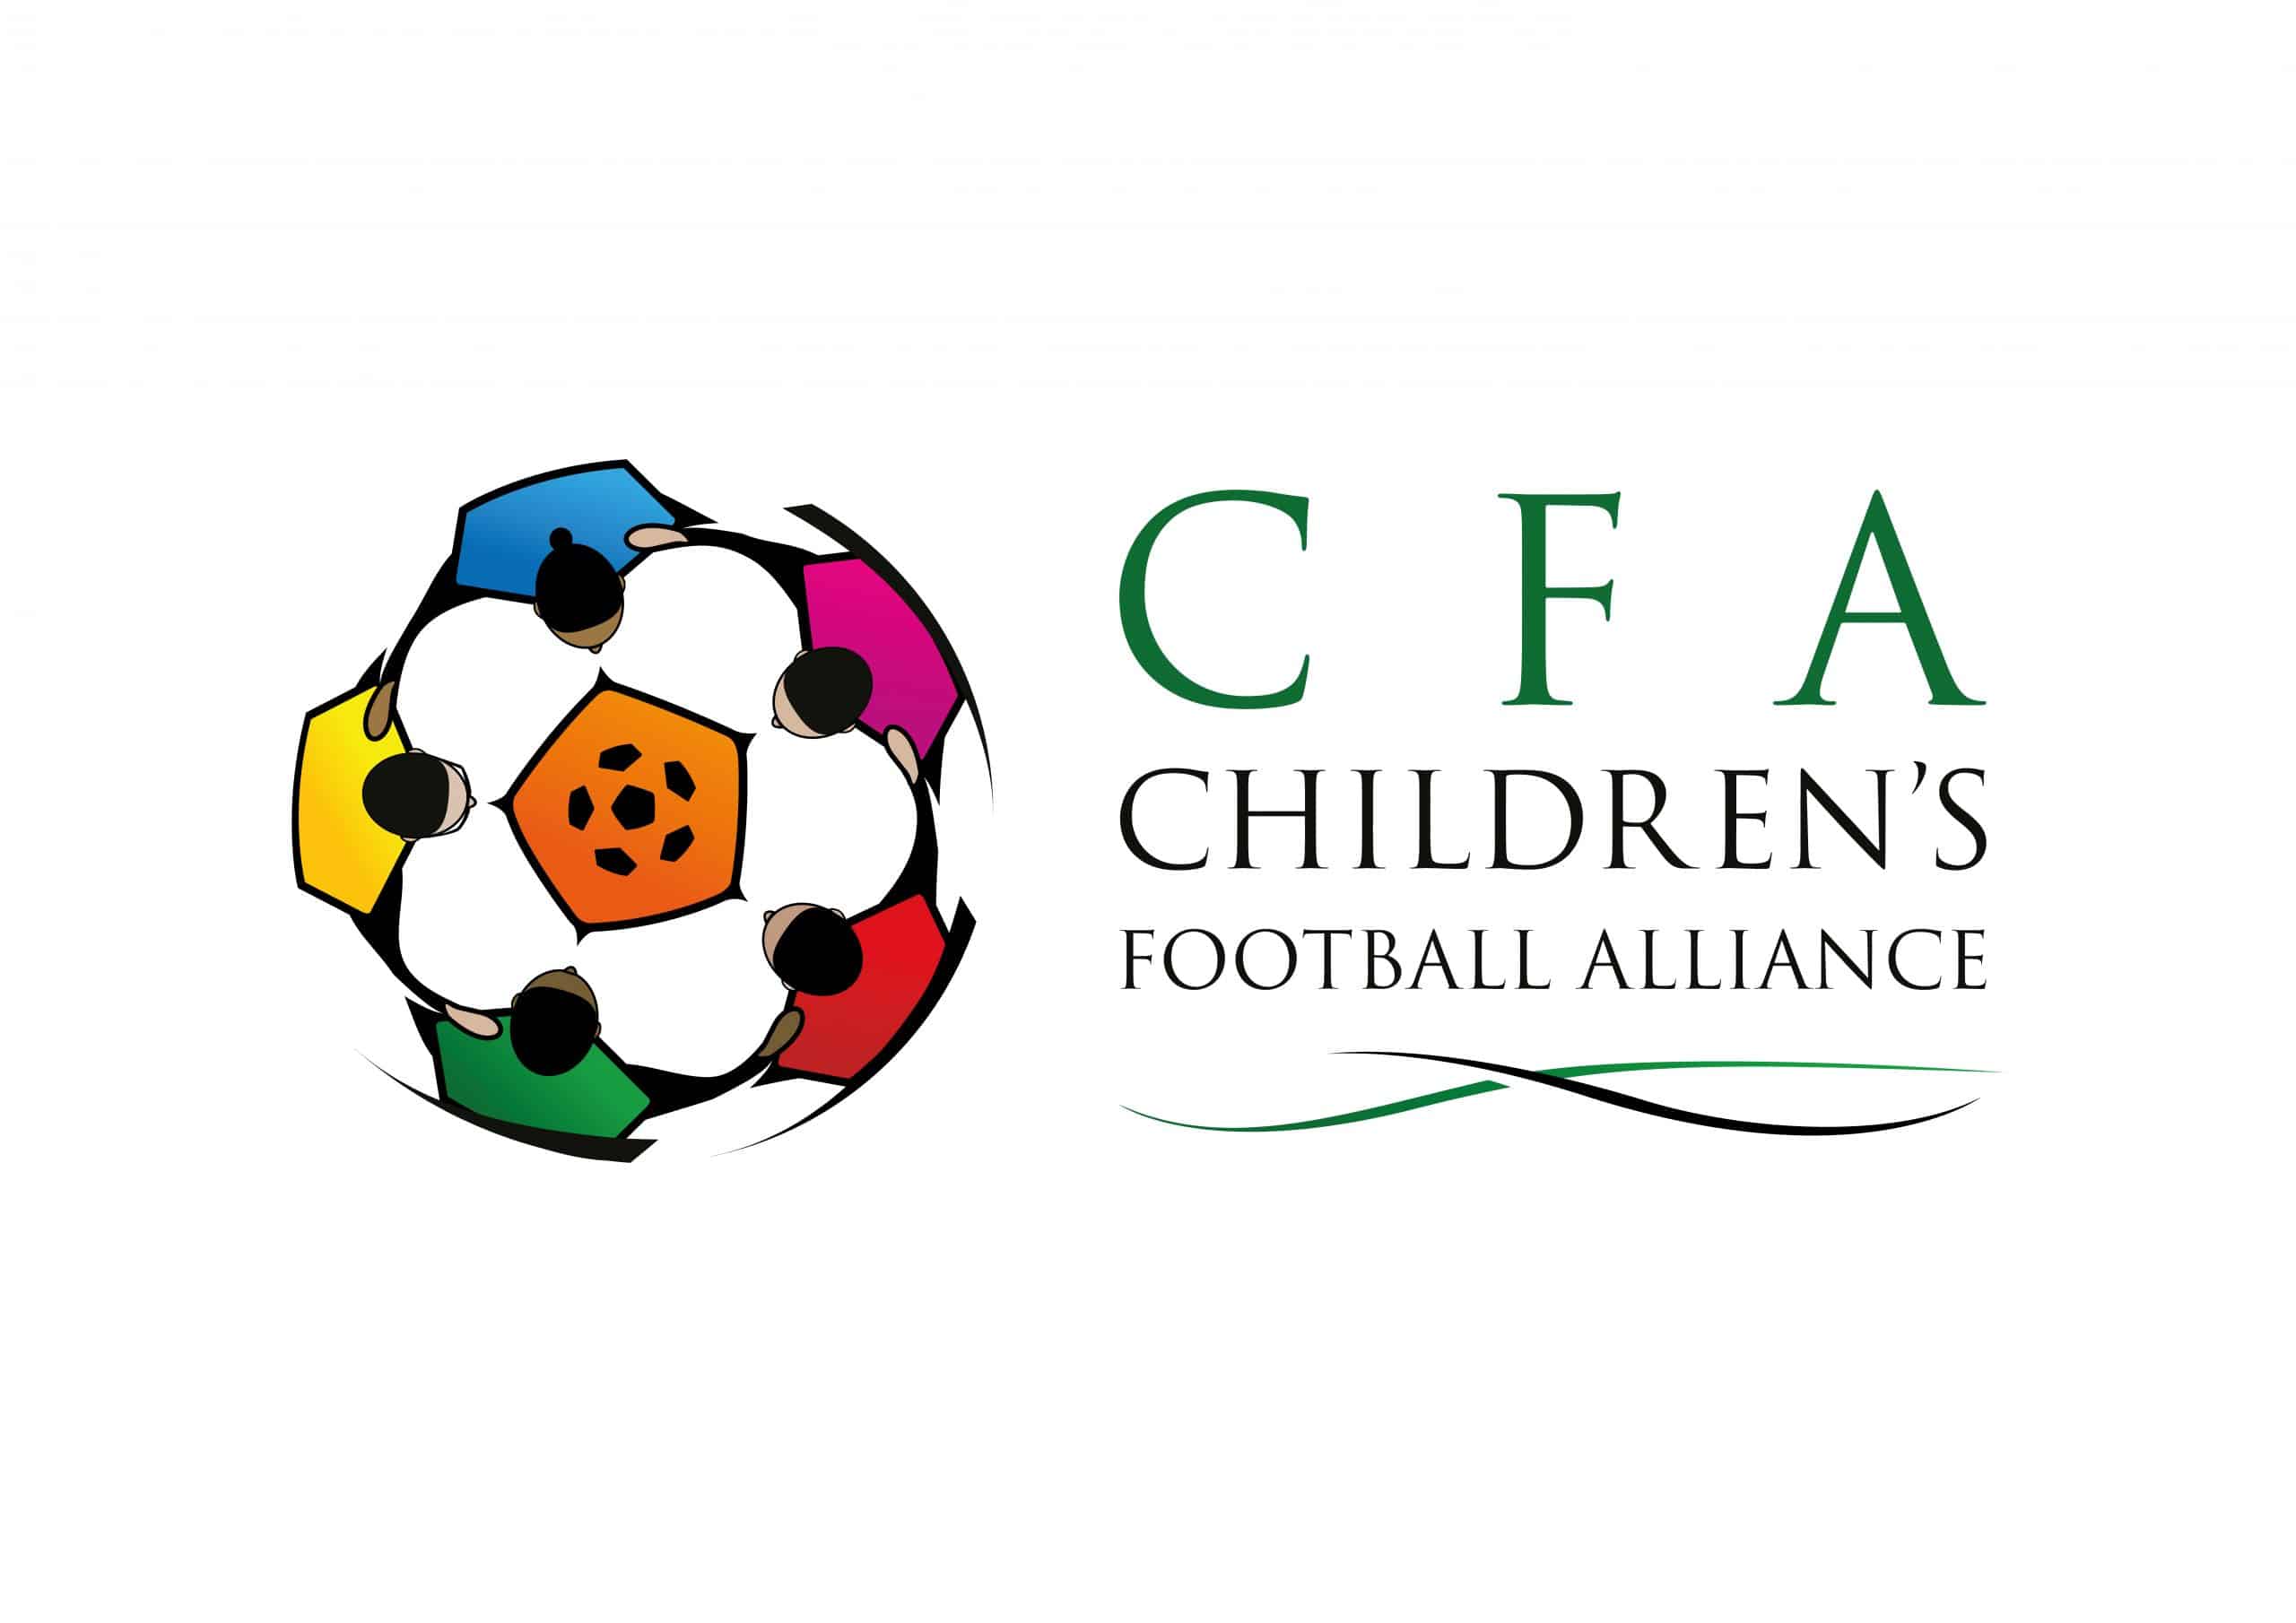 The Children’s Football Alliance (CFA) logo